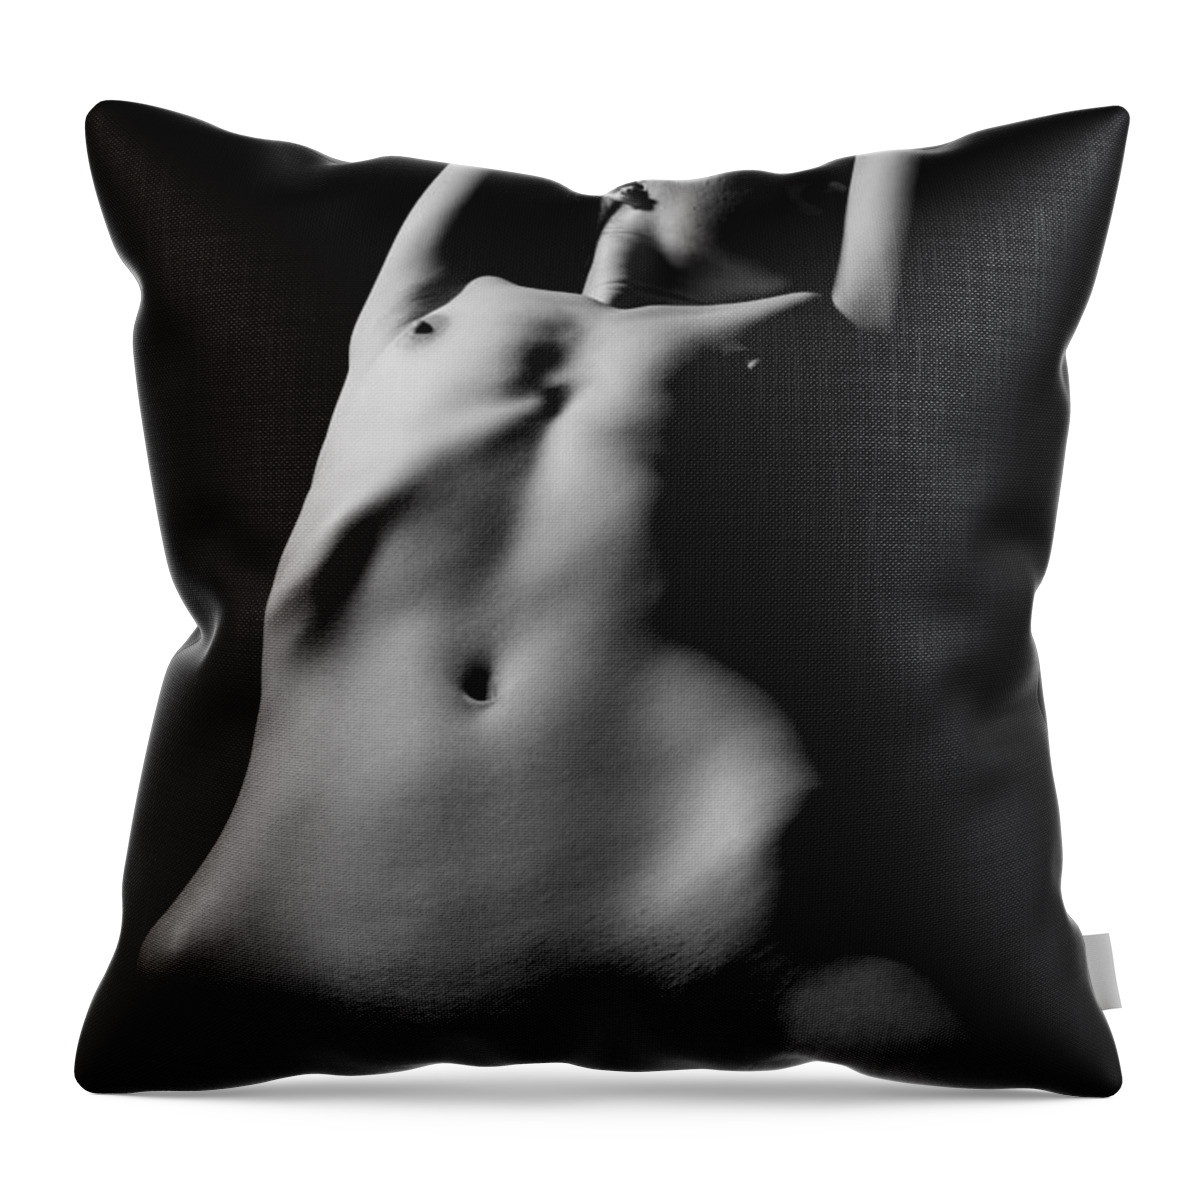 Female Throw Pillow featuring the photograph Contours by Joe Kozlowski